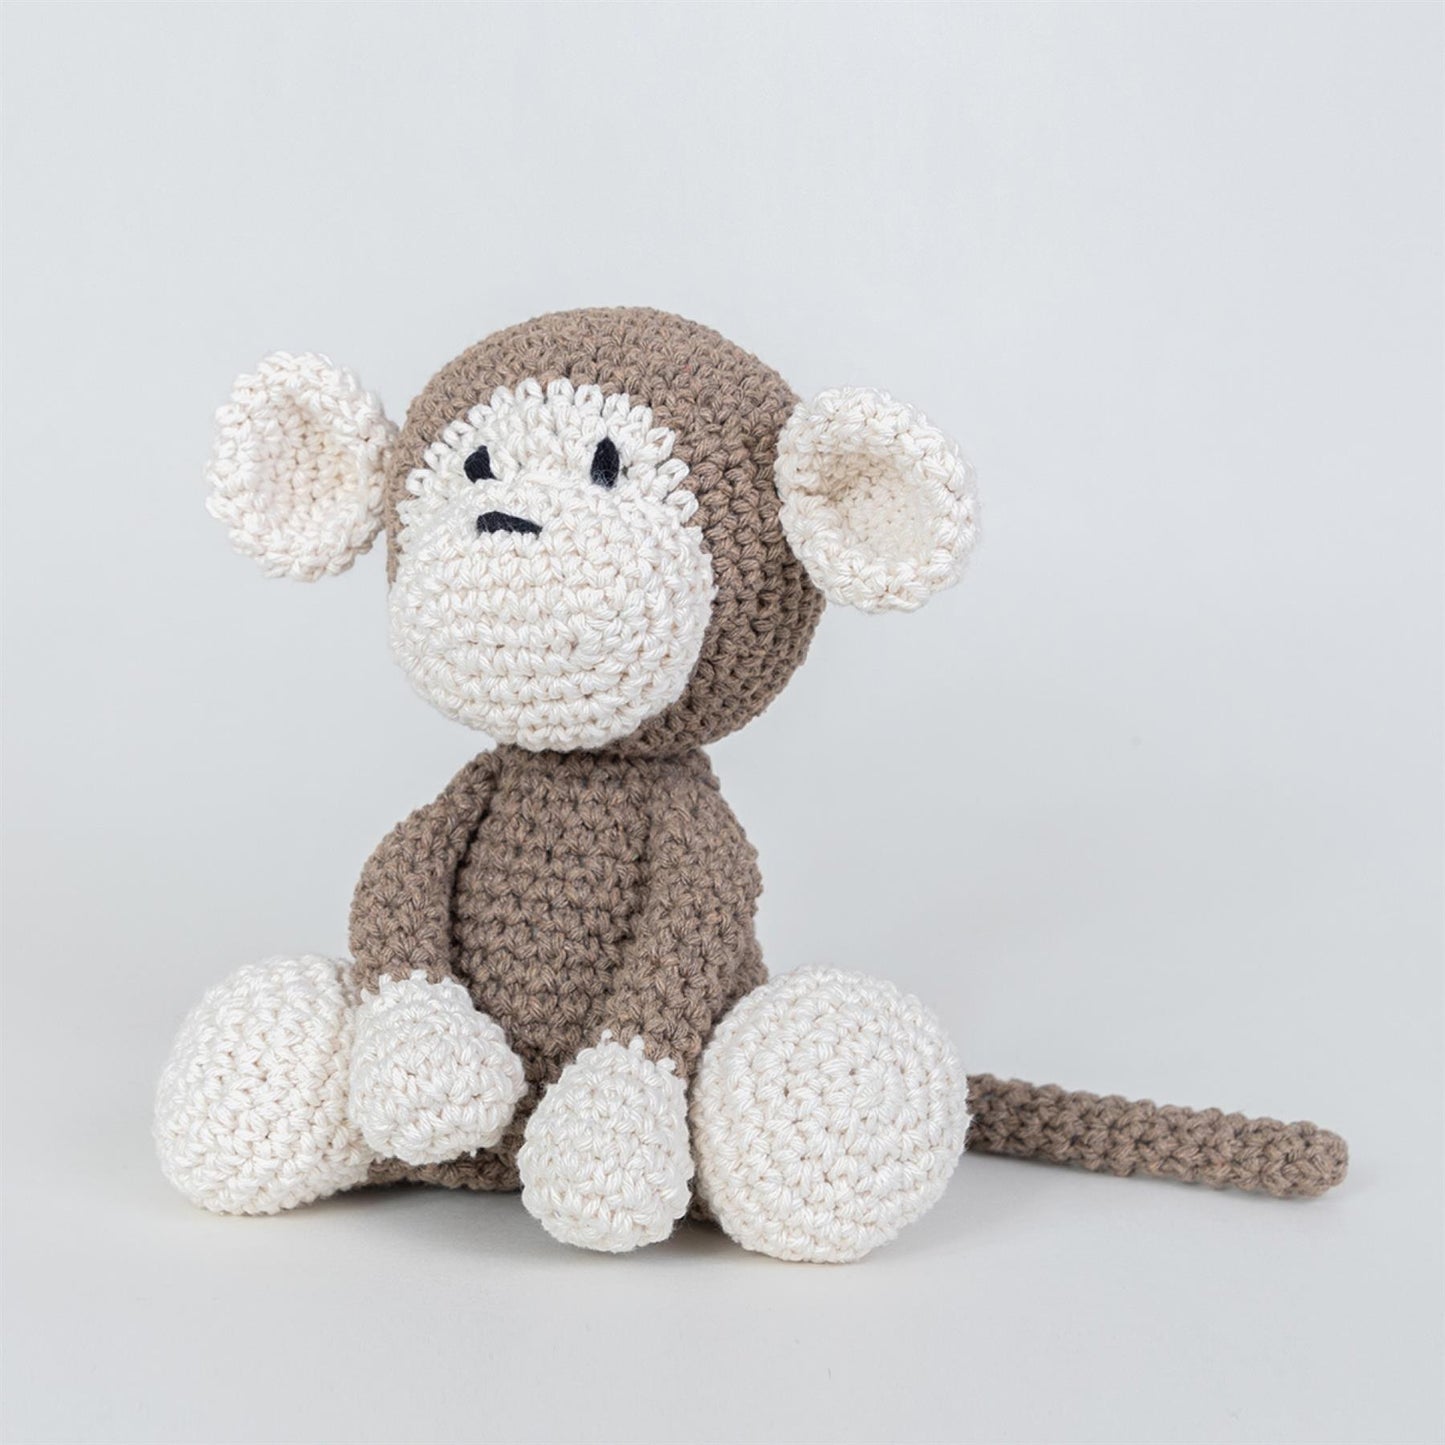 [Hoooked] PAK125 Eco Barbante Milano Taupe Cotton Monkey Mace Crochet Amigurumi Kit